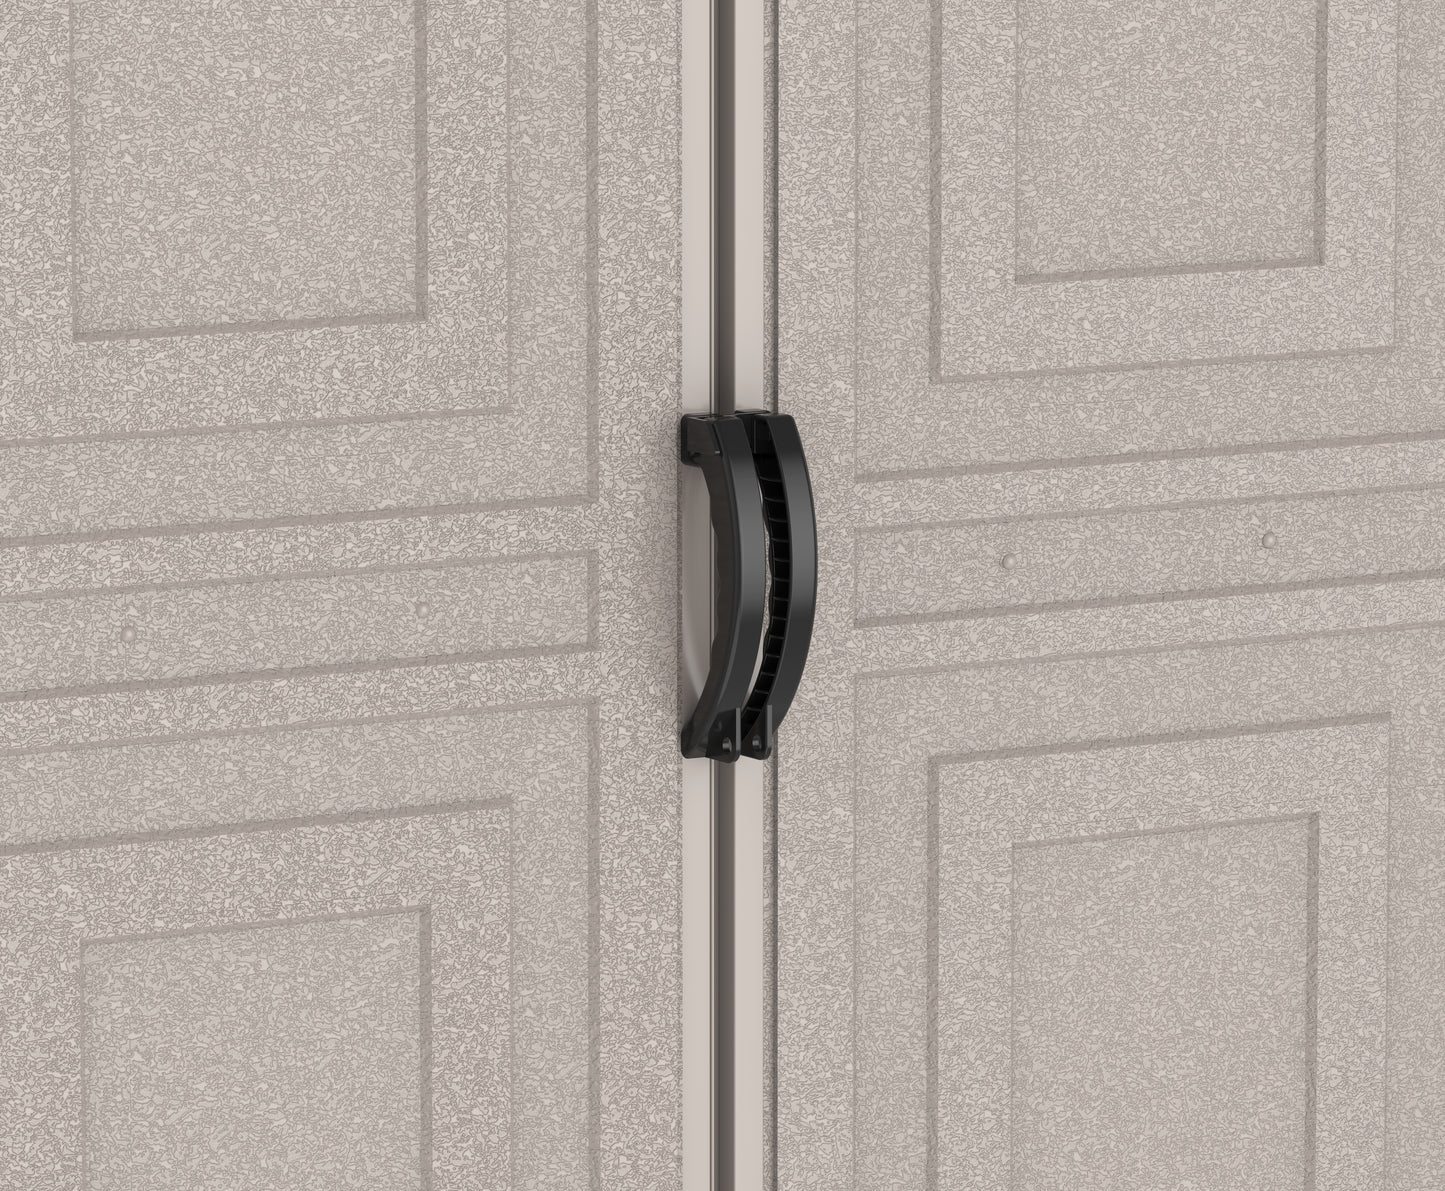 Duramax Vinyl Garage 10.5x28.5 w/ Foundation 2 Windows 15526 close up of outside door handles